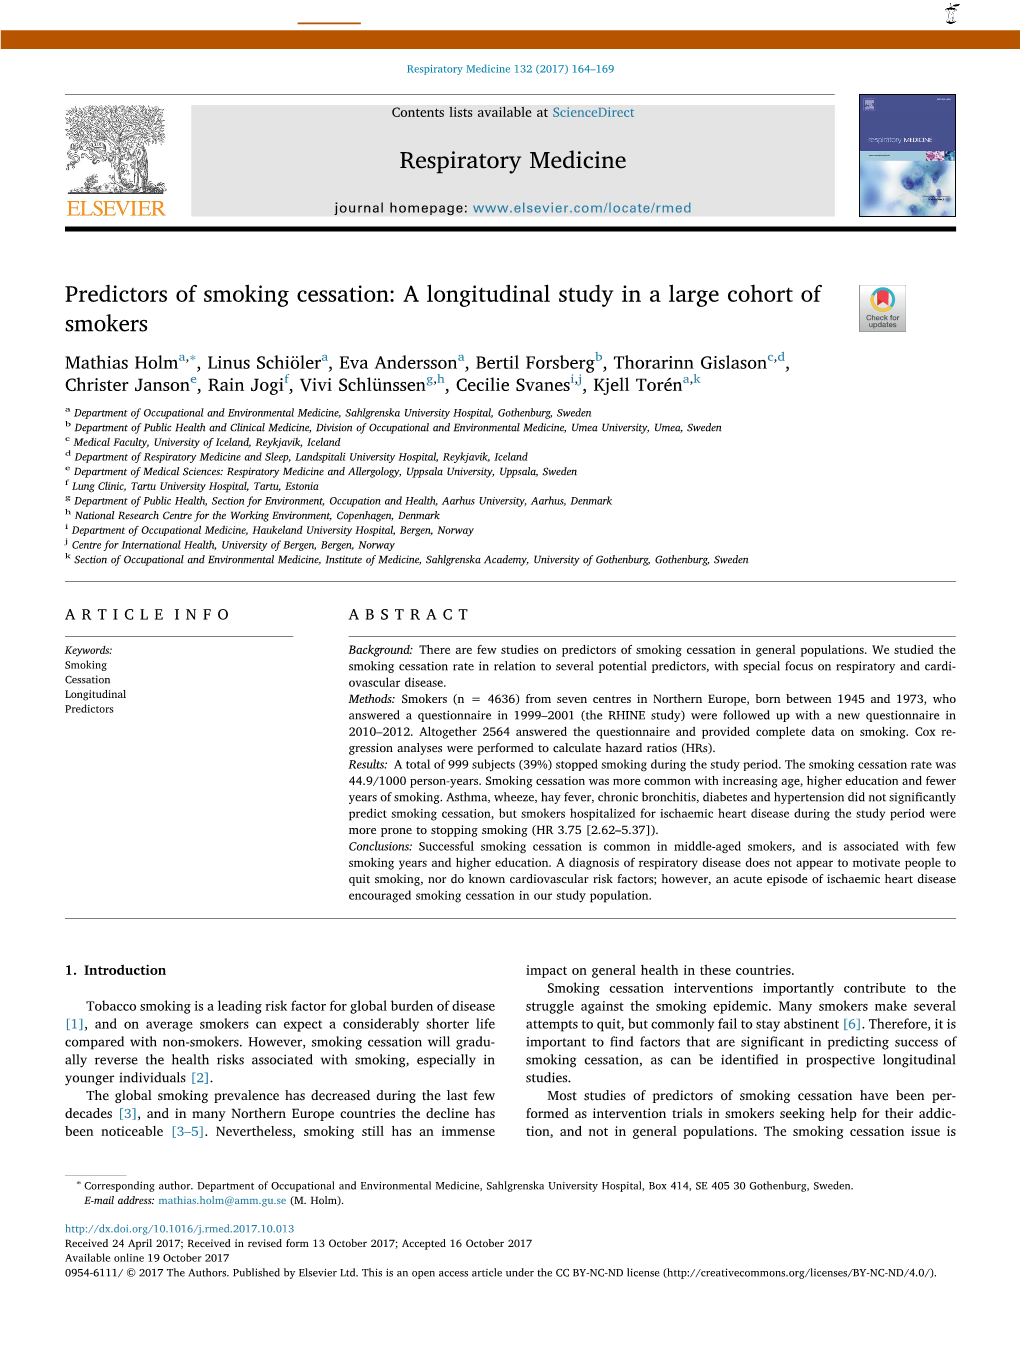 Predictors of Smoking Cessation a Longitudinal Study in a Large Cohort